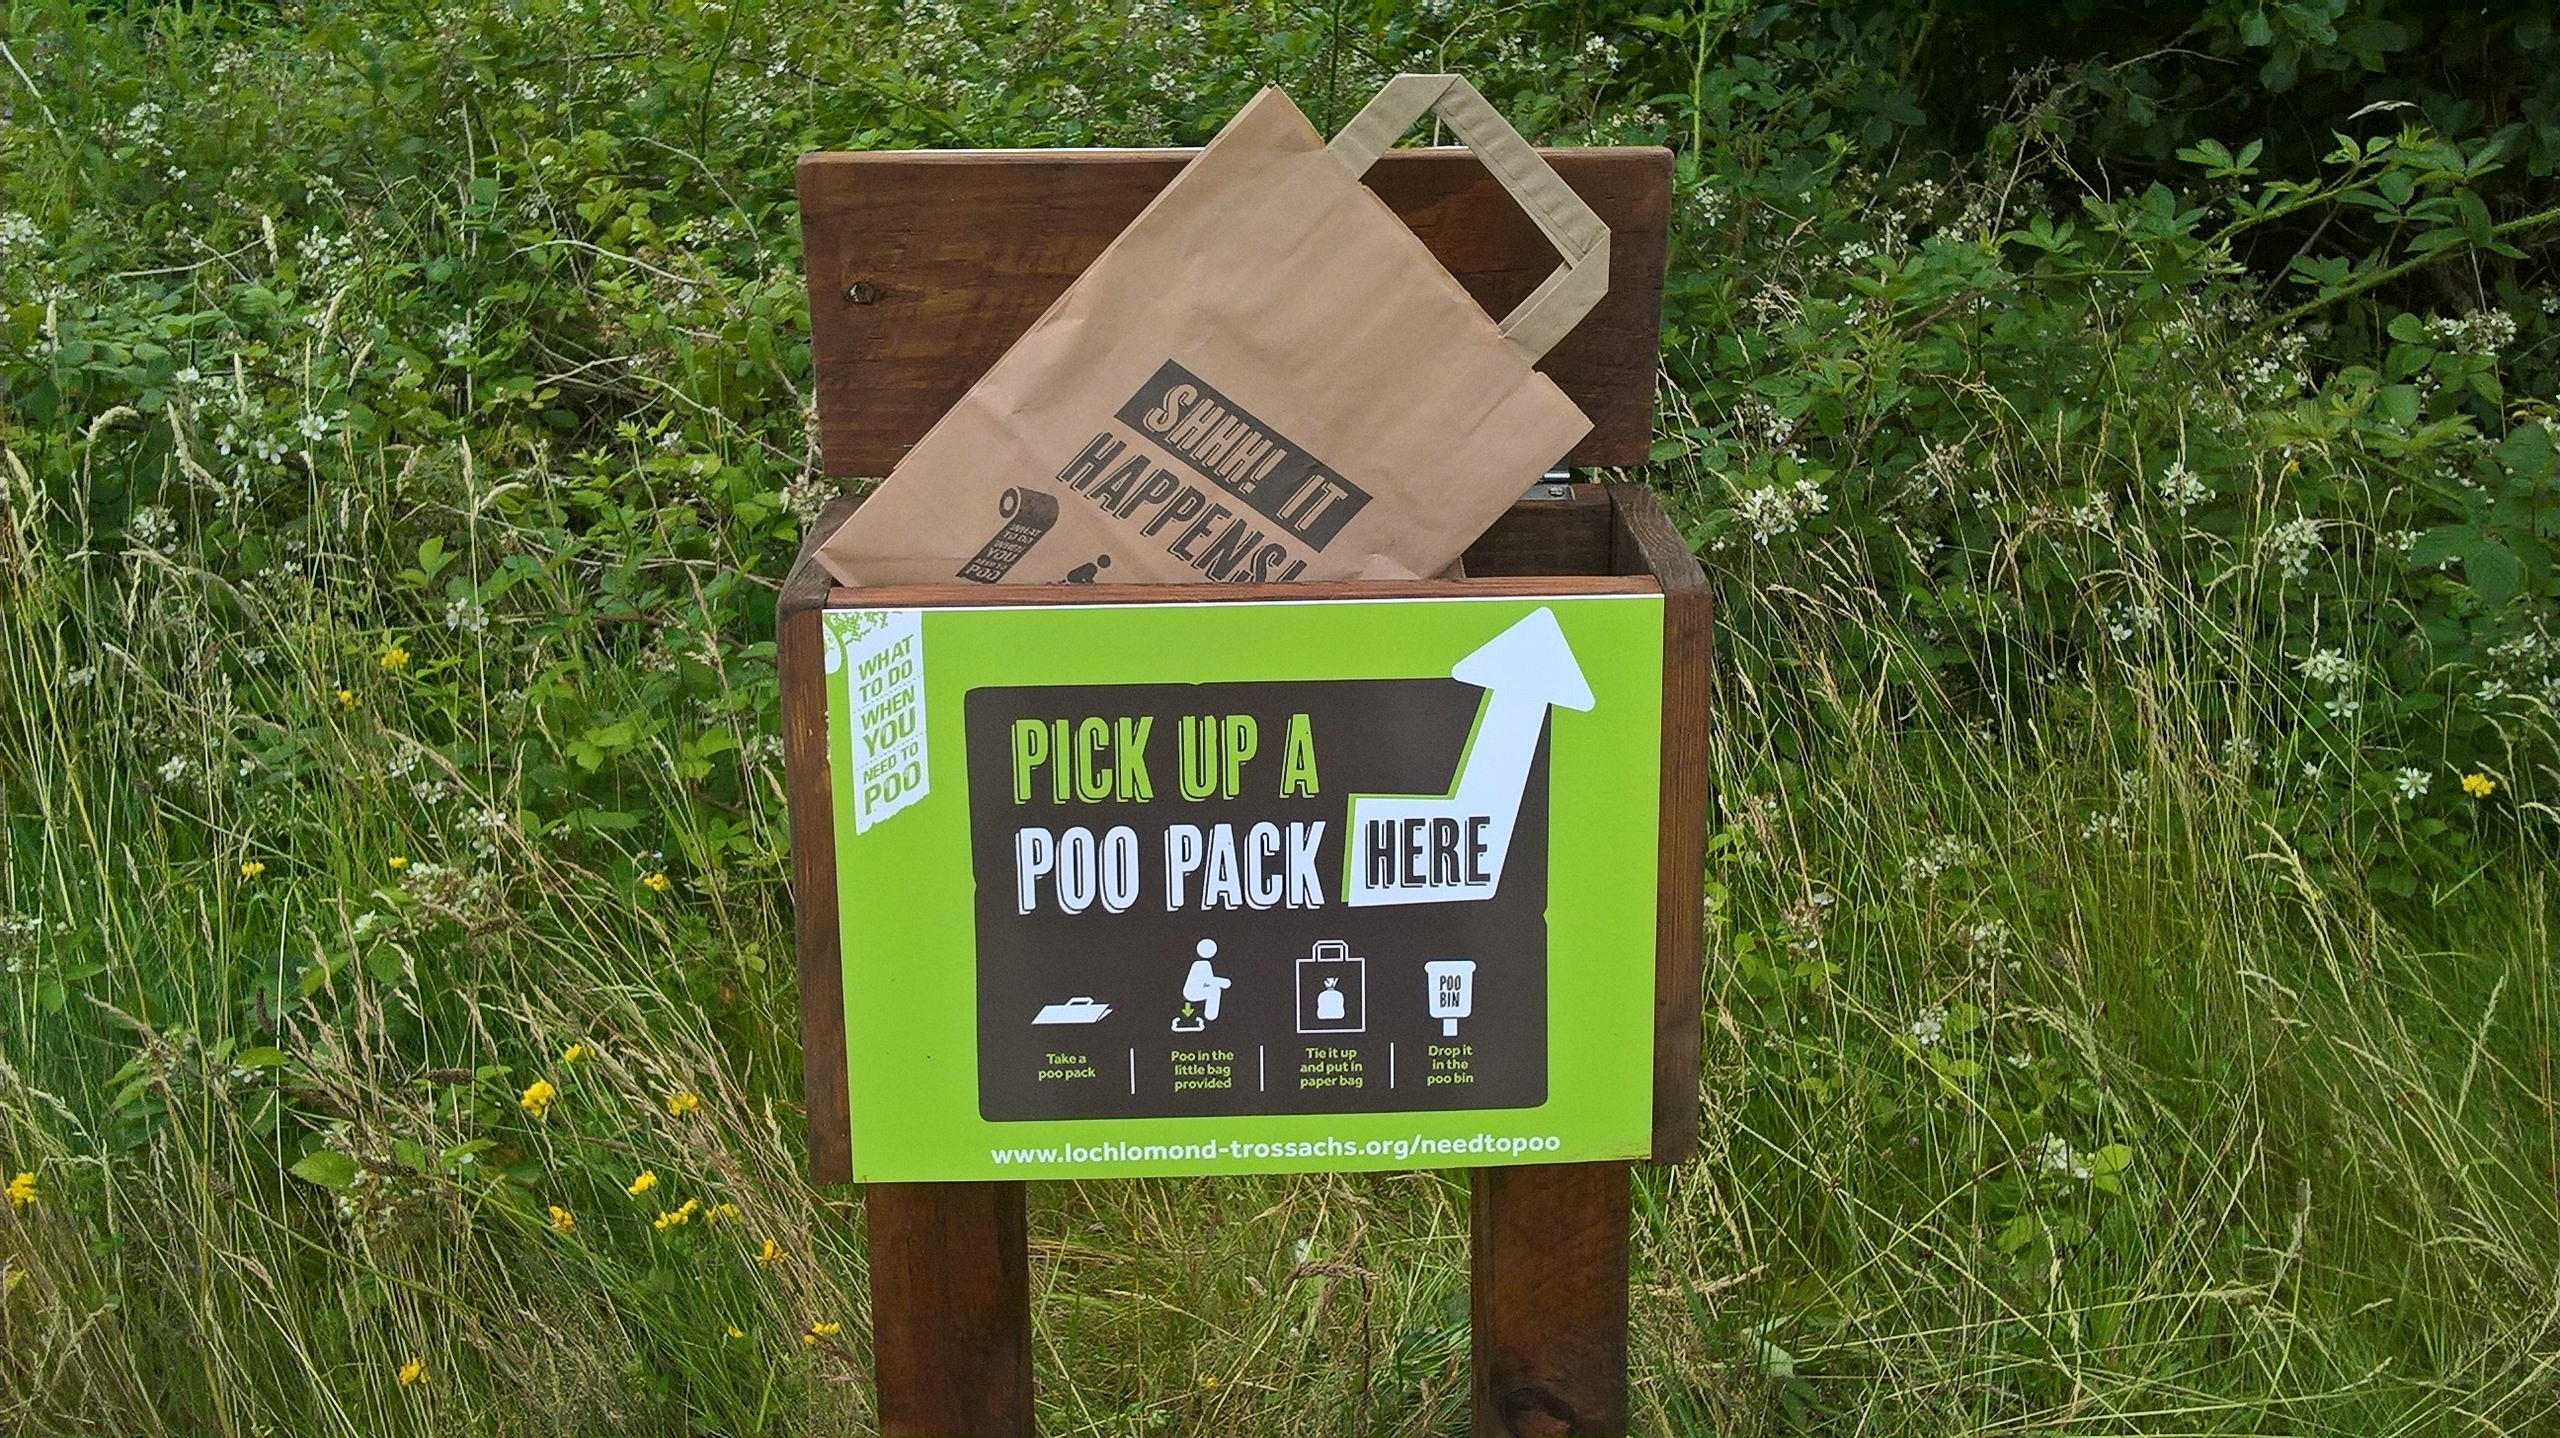 Poo pack box at Loch Lomond.  © Loch Lomond & The Trossachs National Park